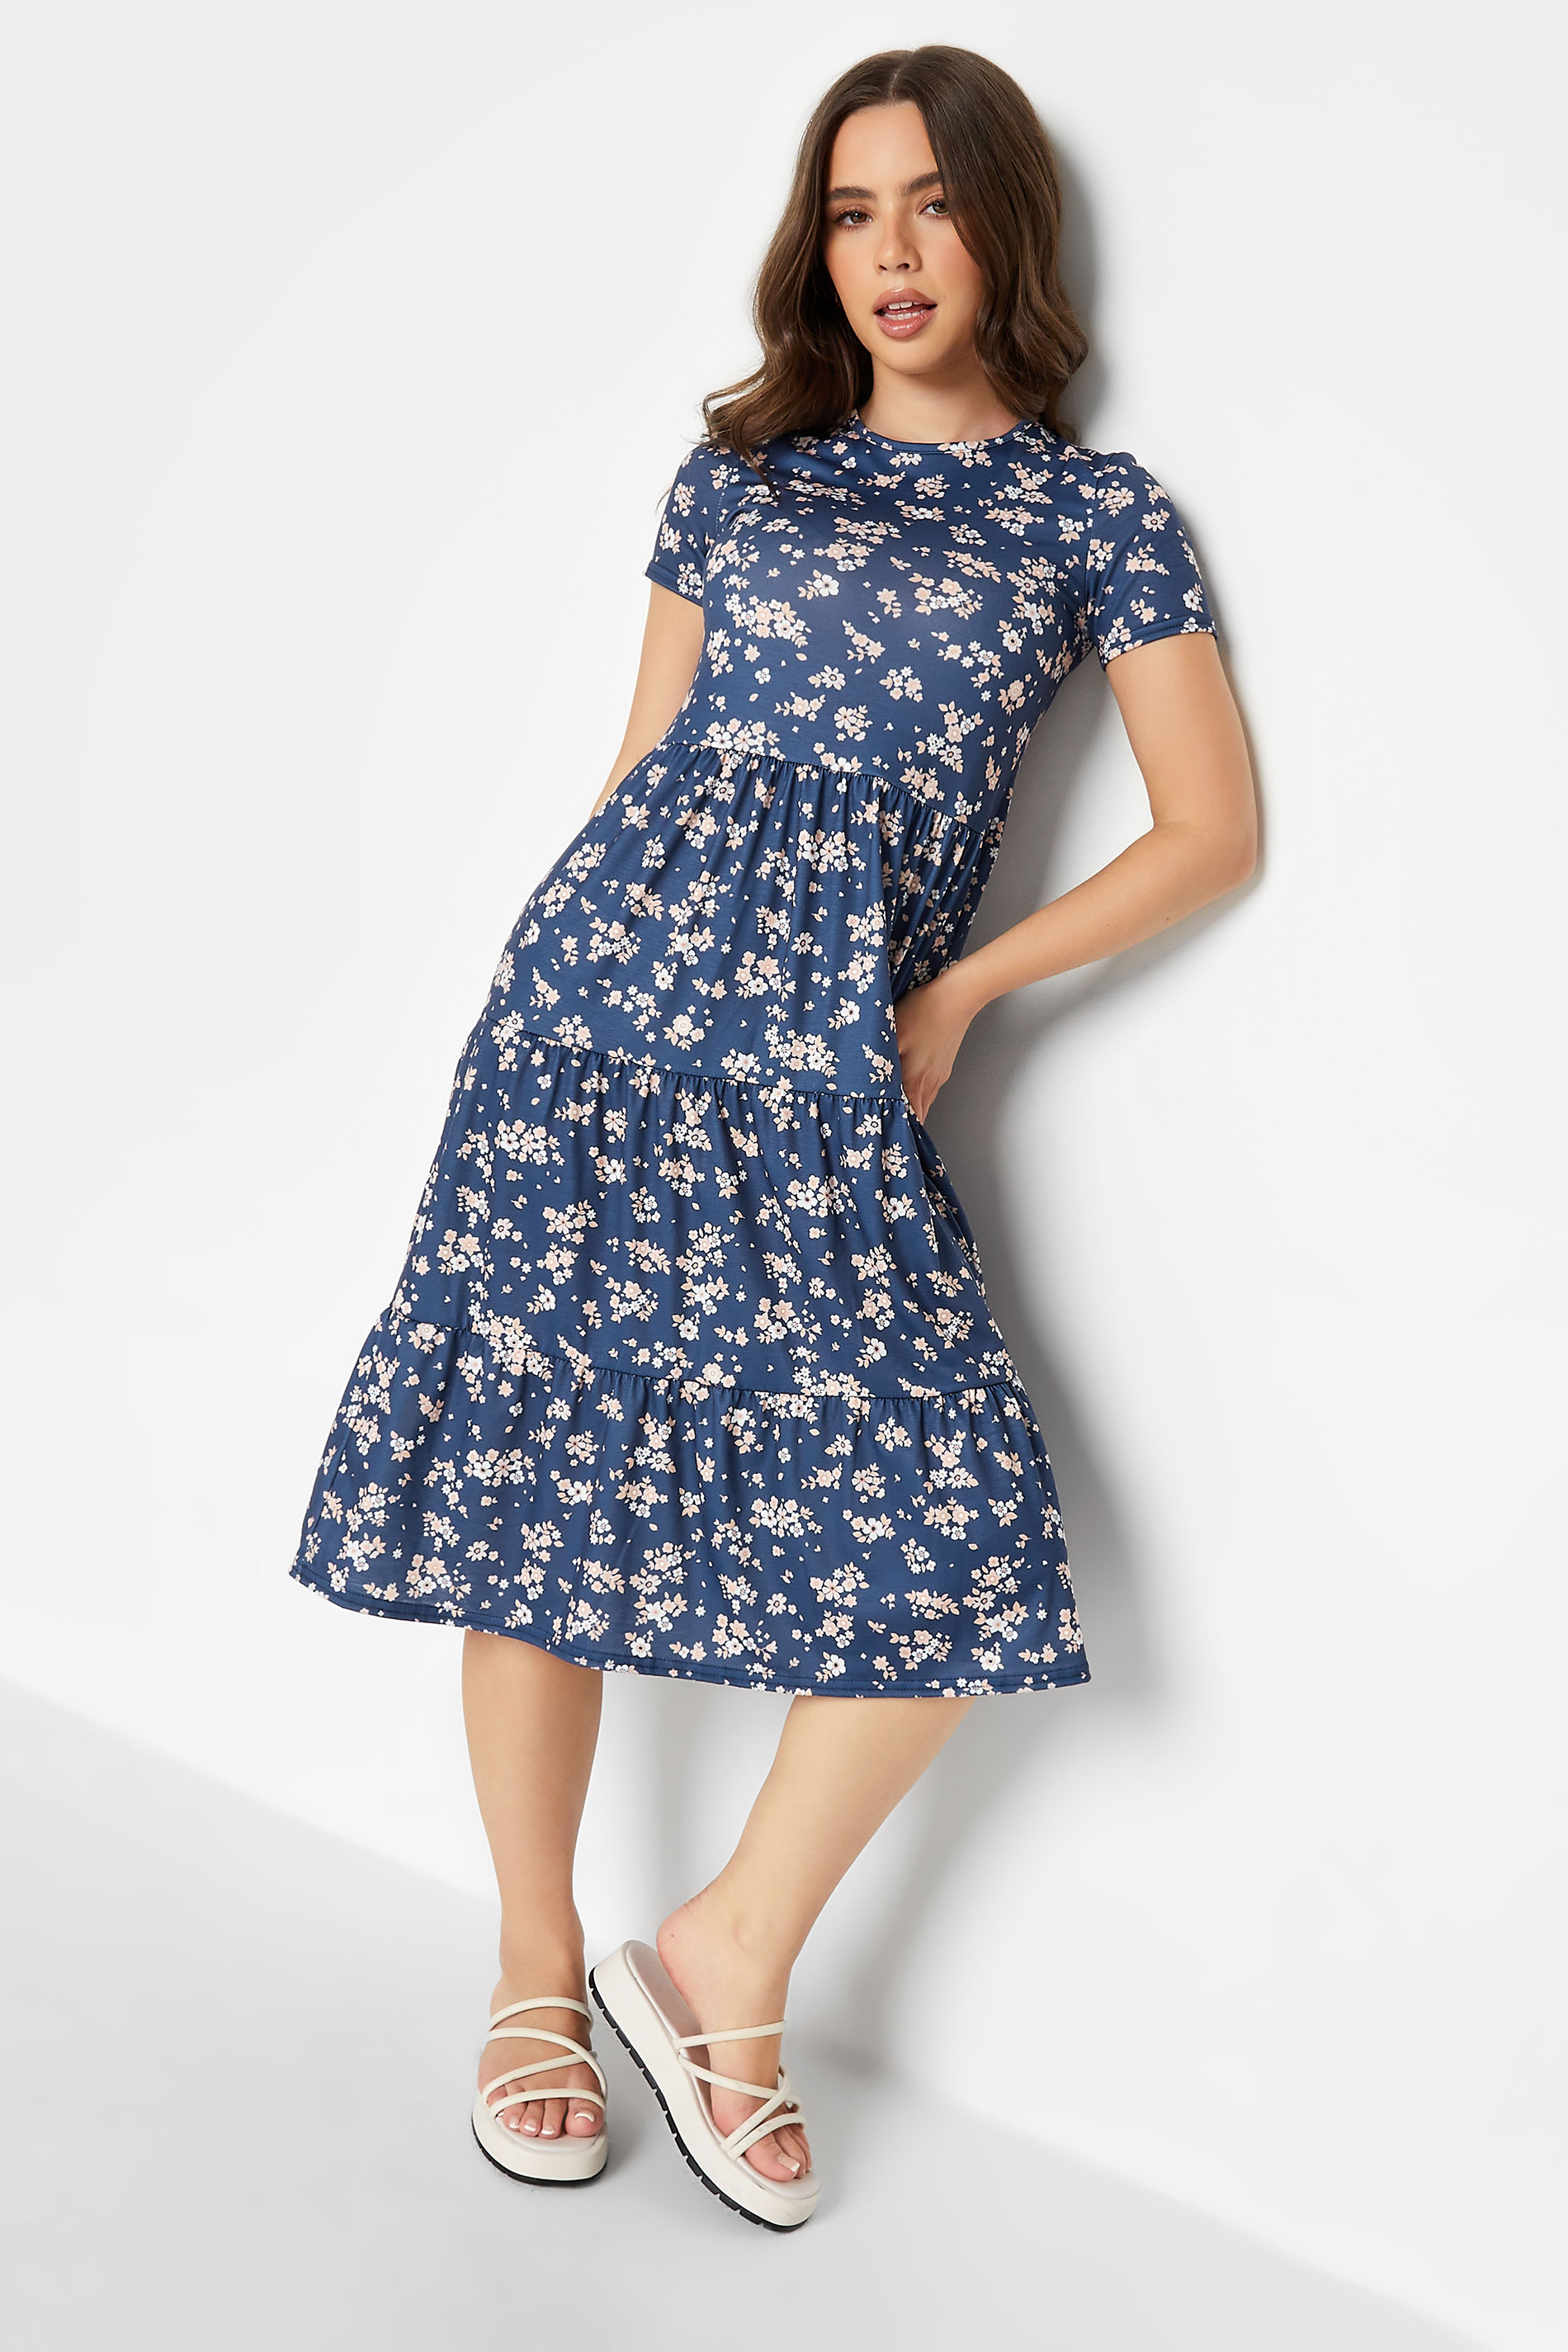 PixieGirl Blue Ditsy Floral Print Dress | PixieGirl  1